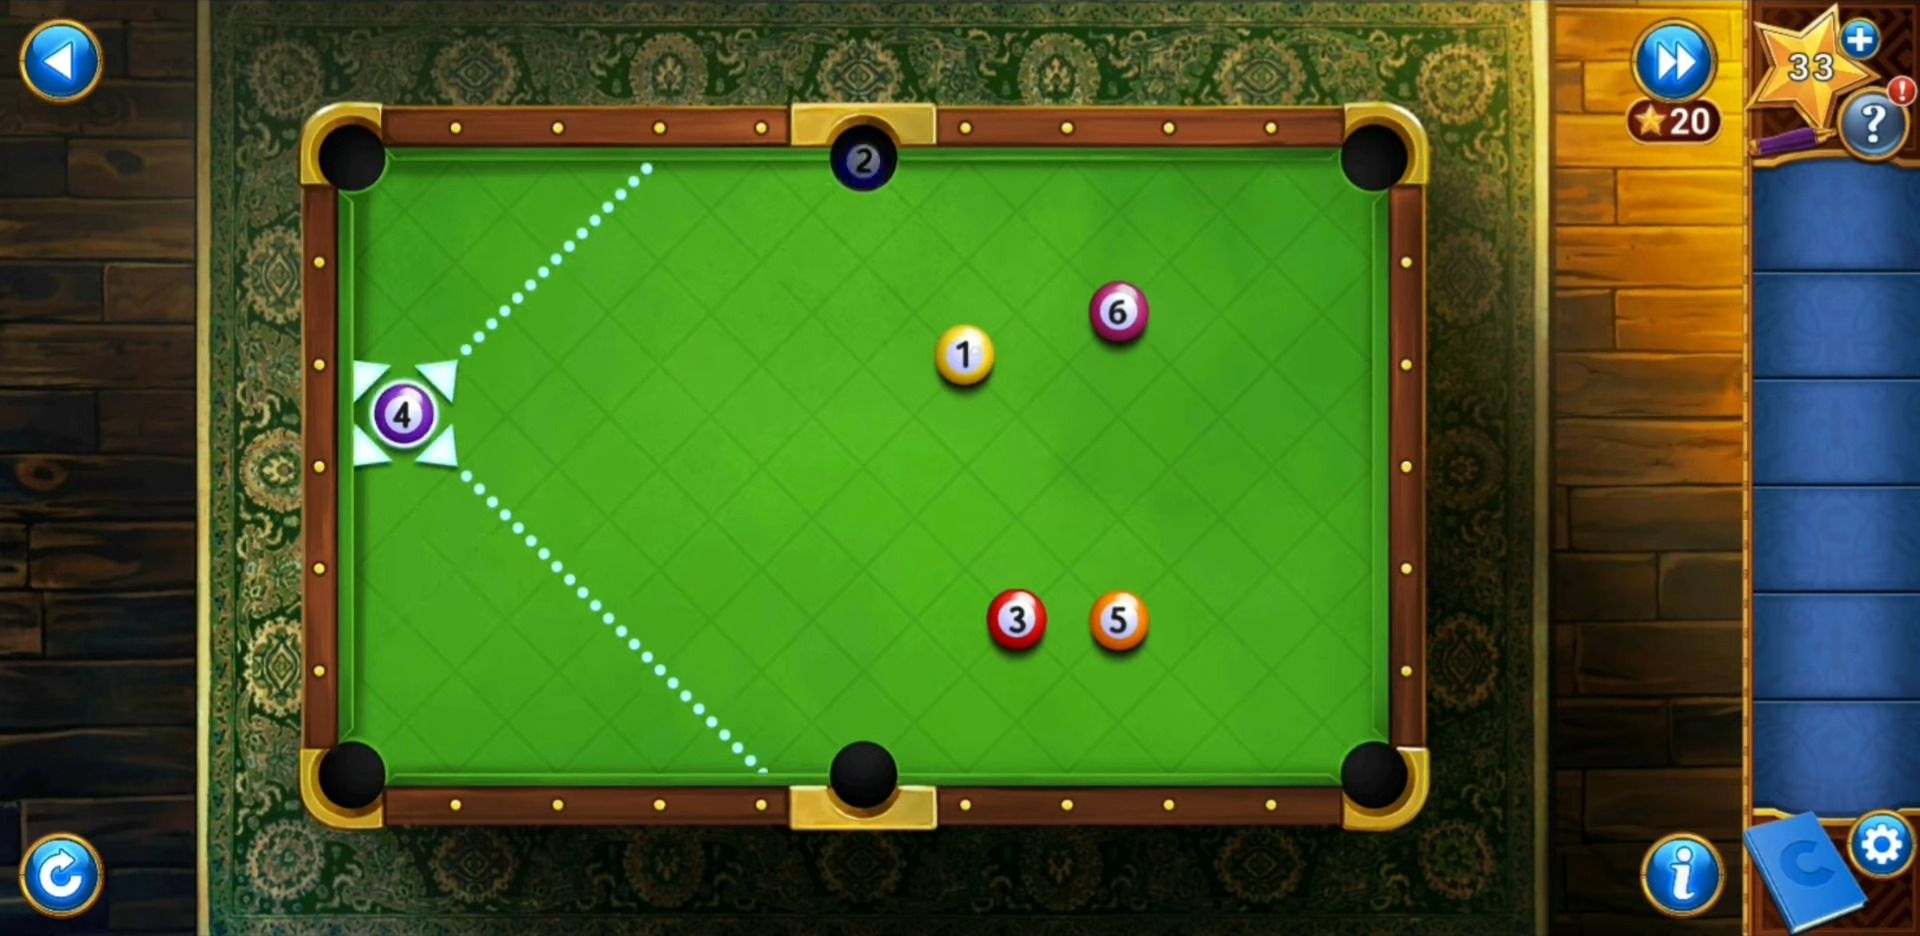 Cluedo - Android game screenshots.